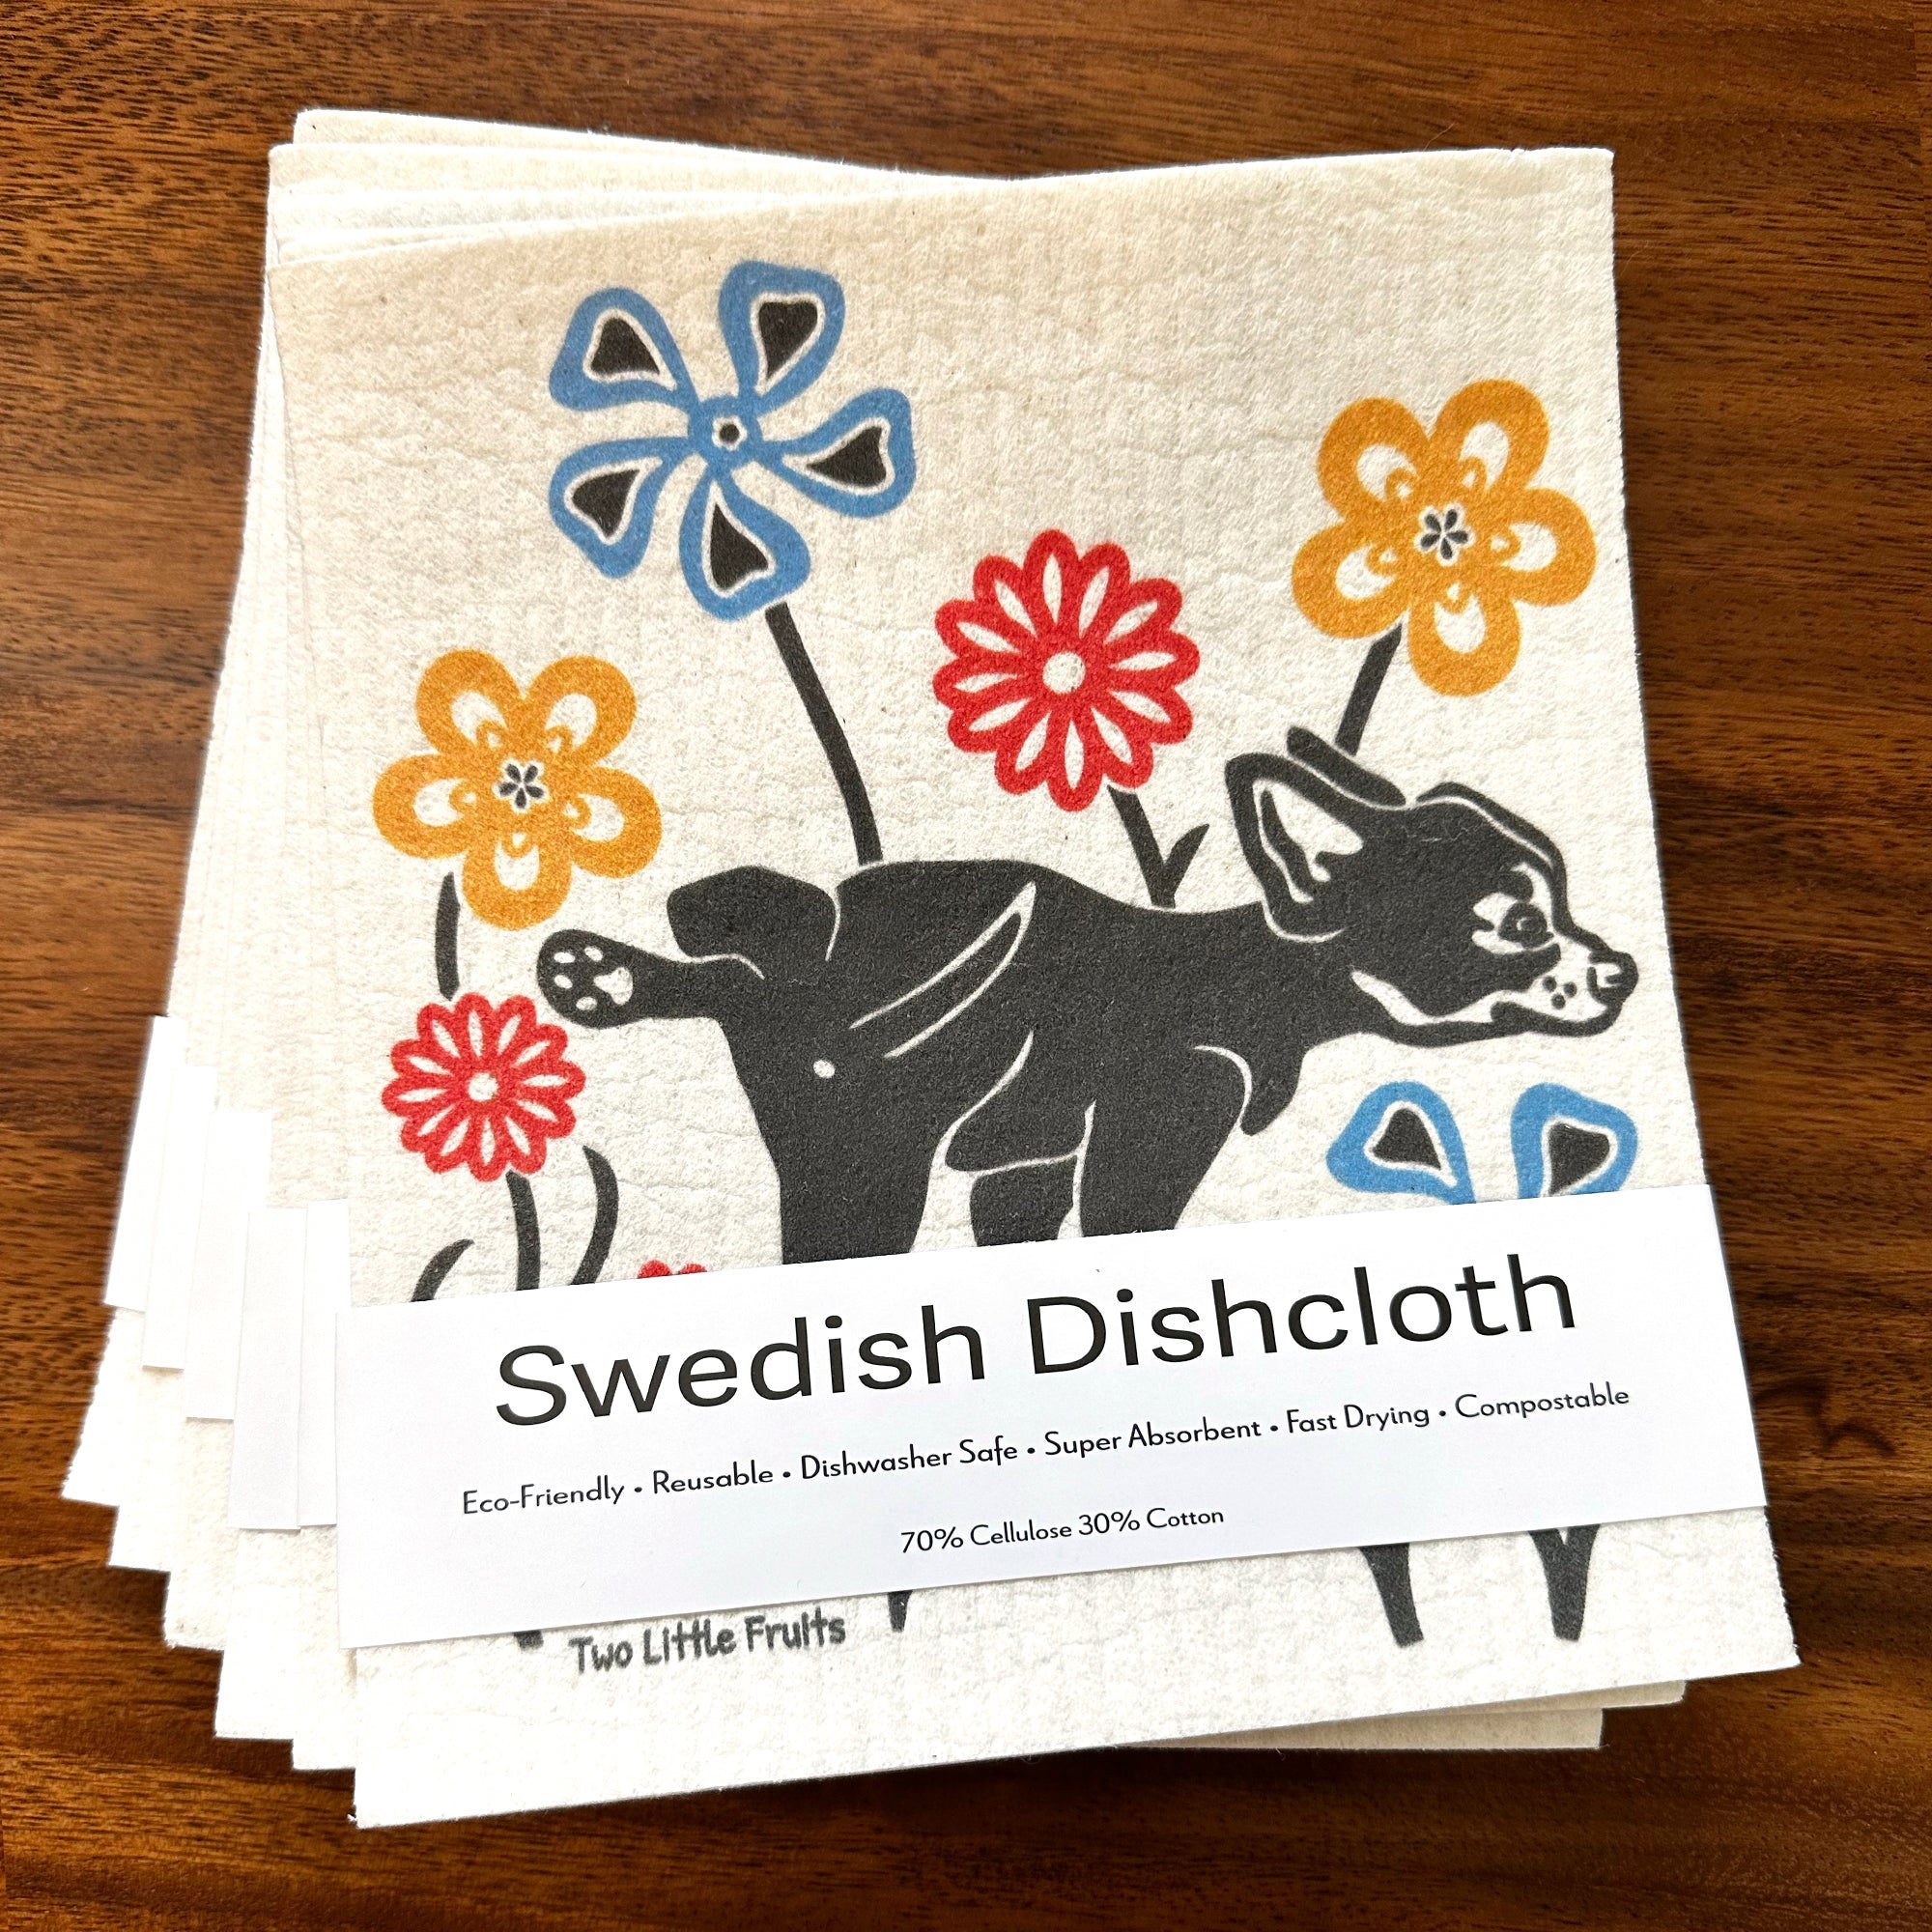 Dog Swedish Dishcloth - Swedish Dish Cloth - Two Little Fruits - Two Little Fruits